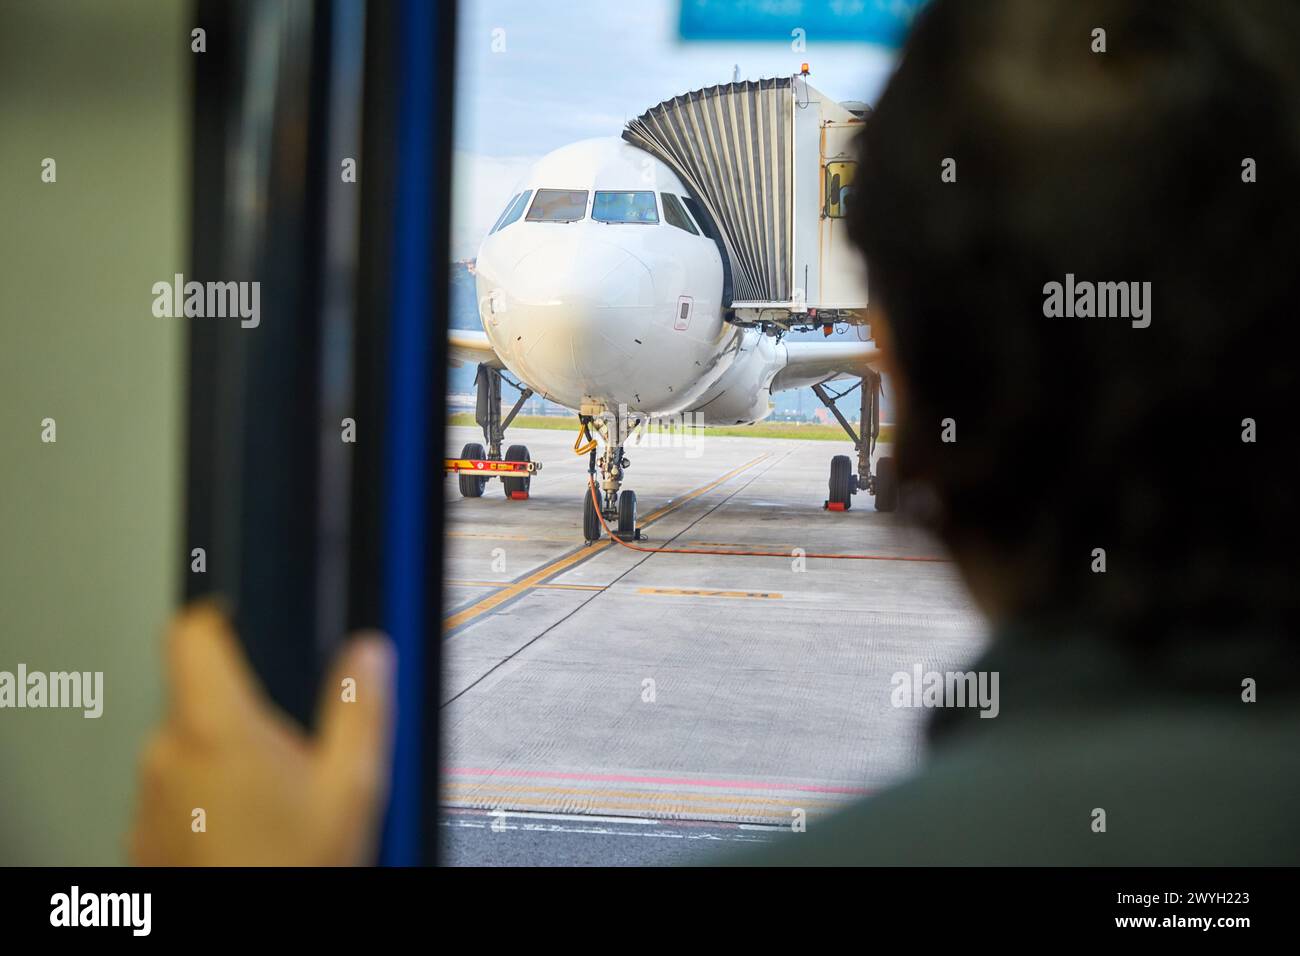 Passenger and plane, Bilbao Airport, Loiu, Bizkaia, Basque Country, Spain. Stock Photo